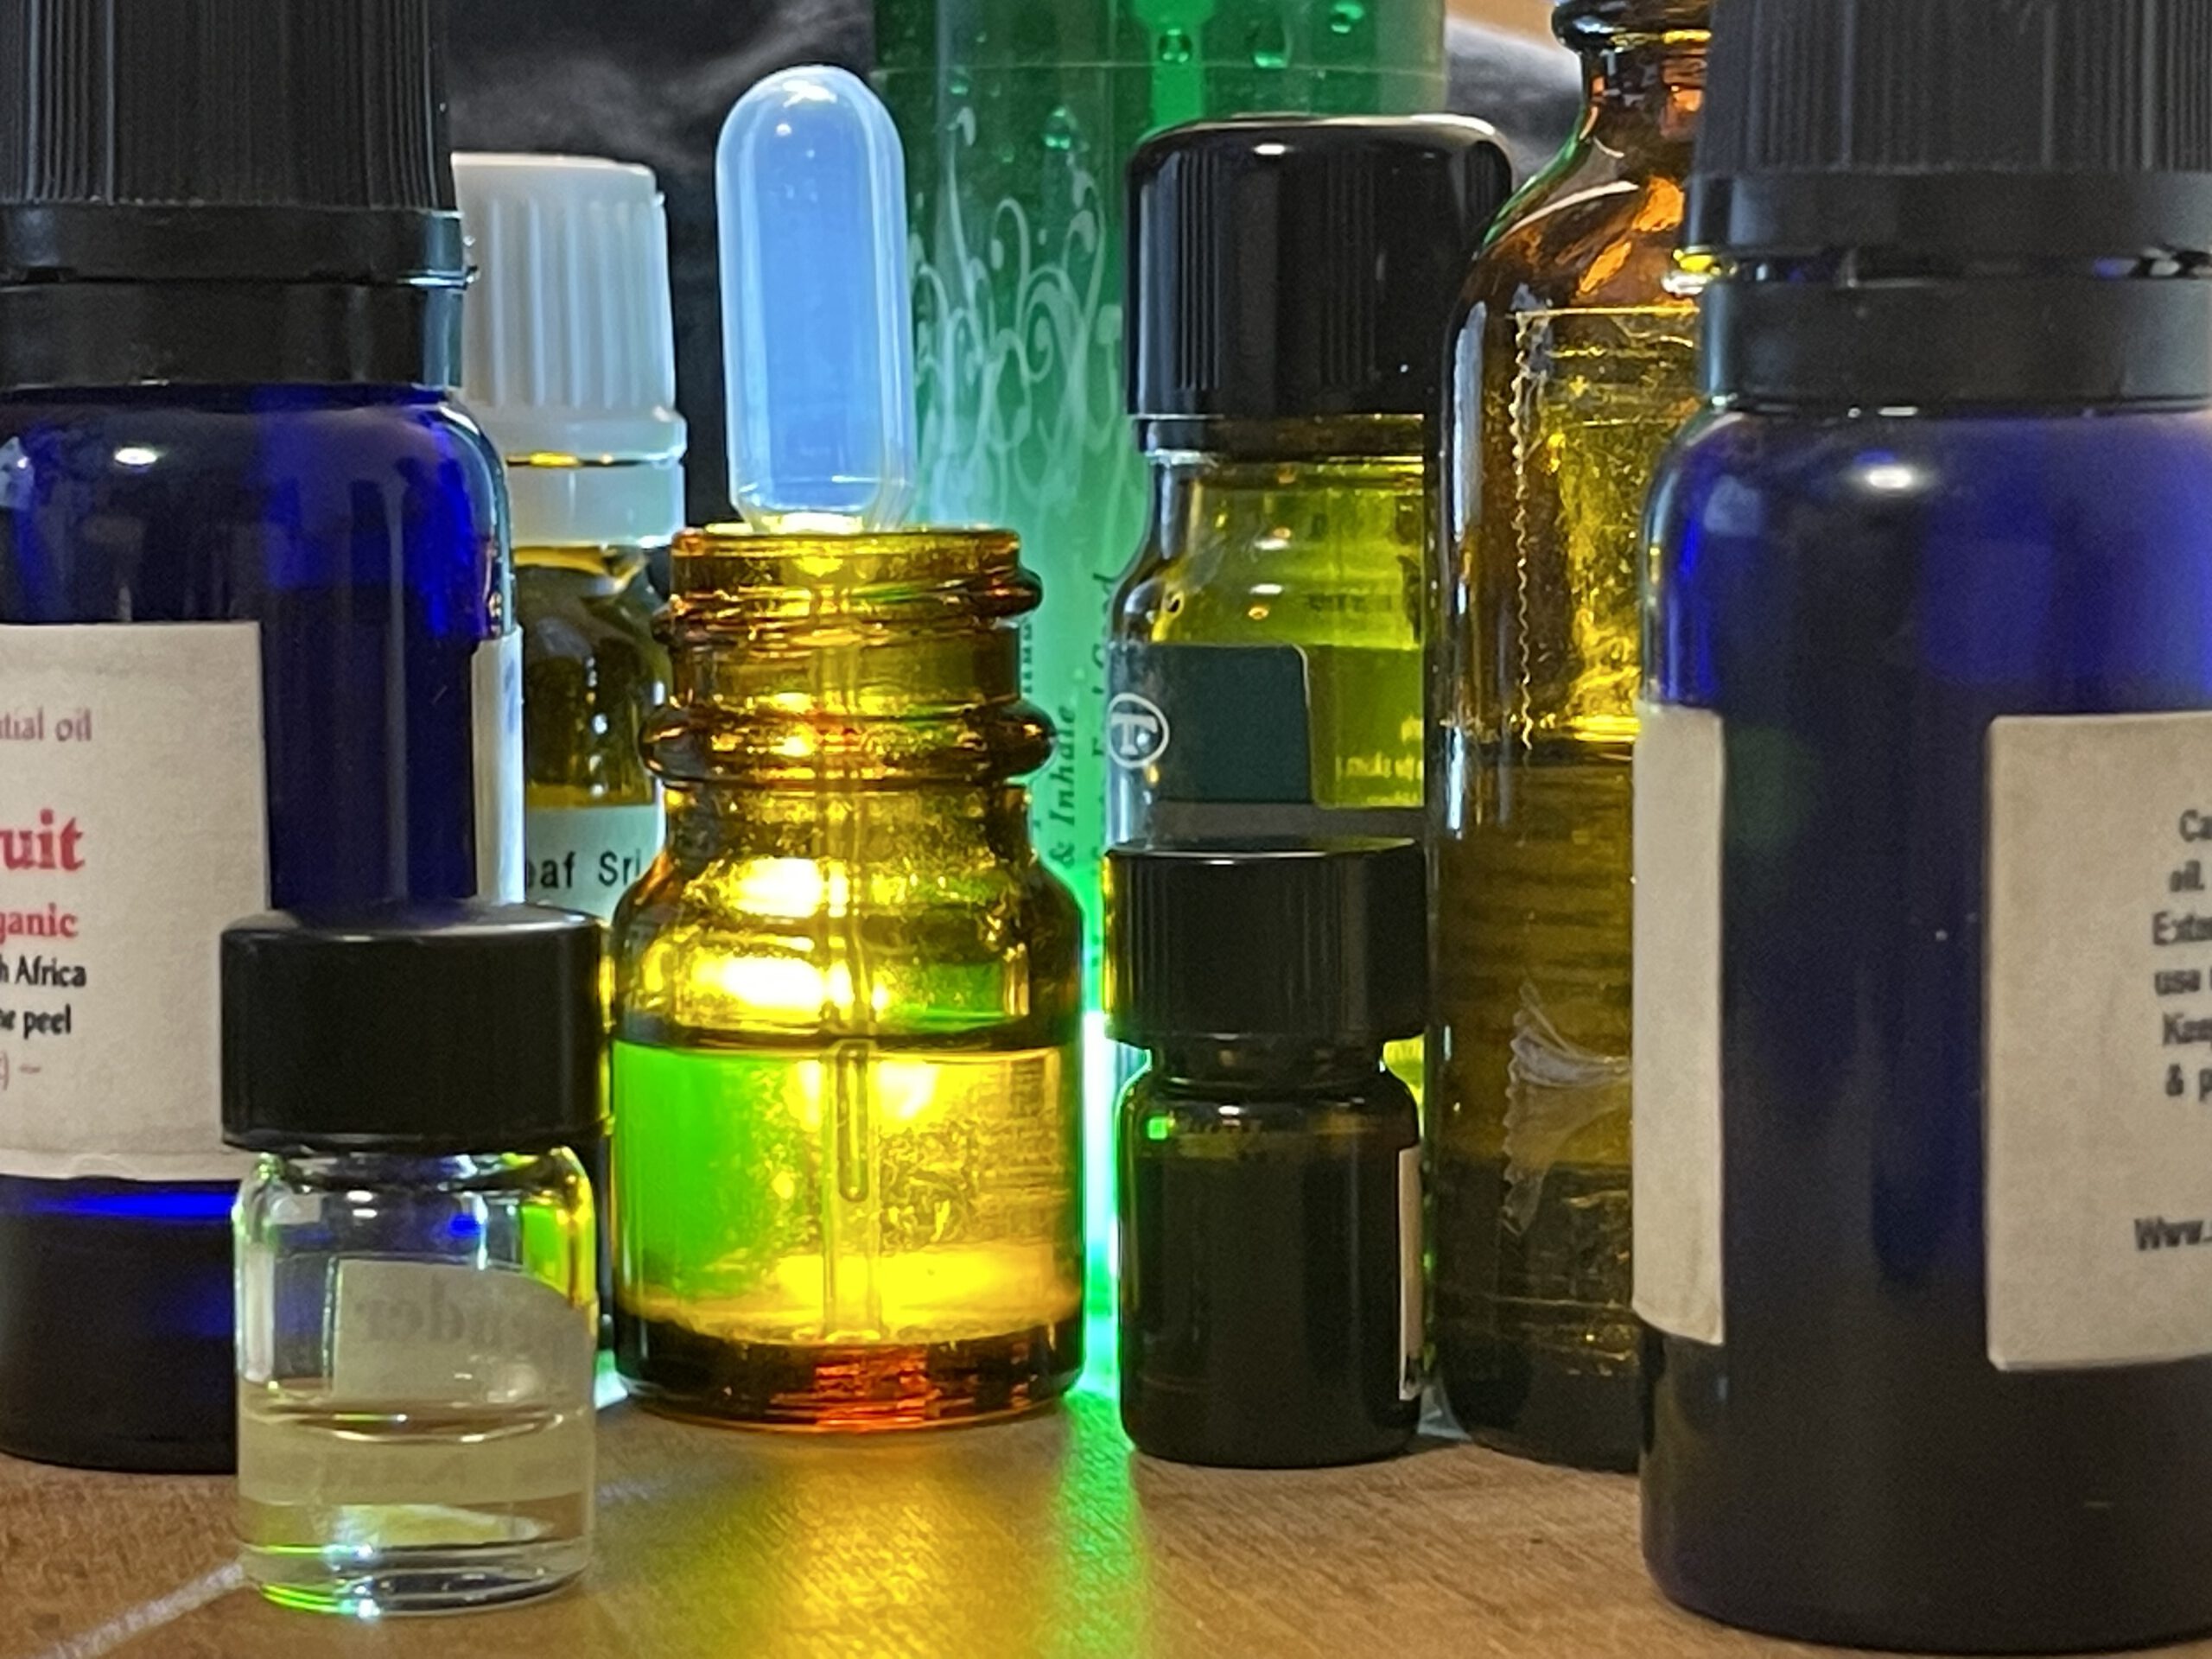 Photo showing vast variety of ingredient bottles